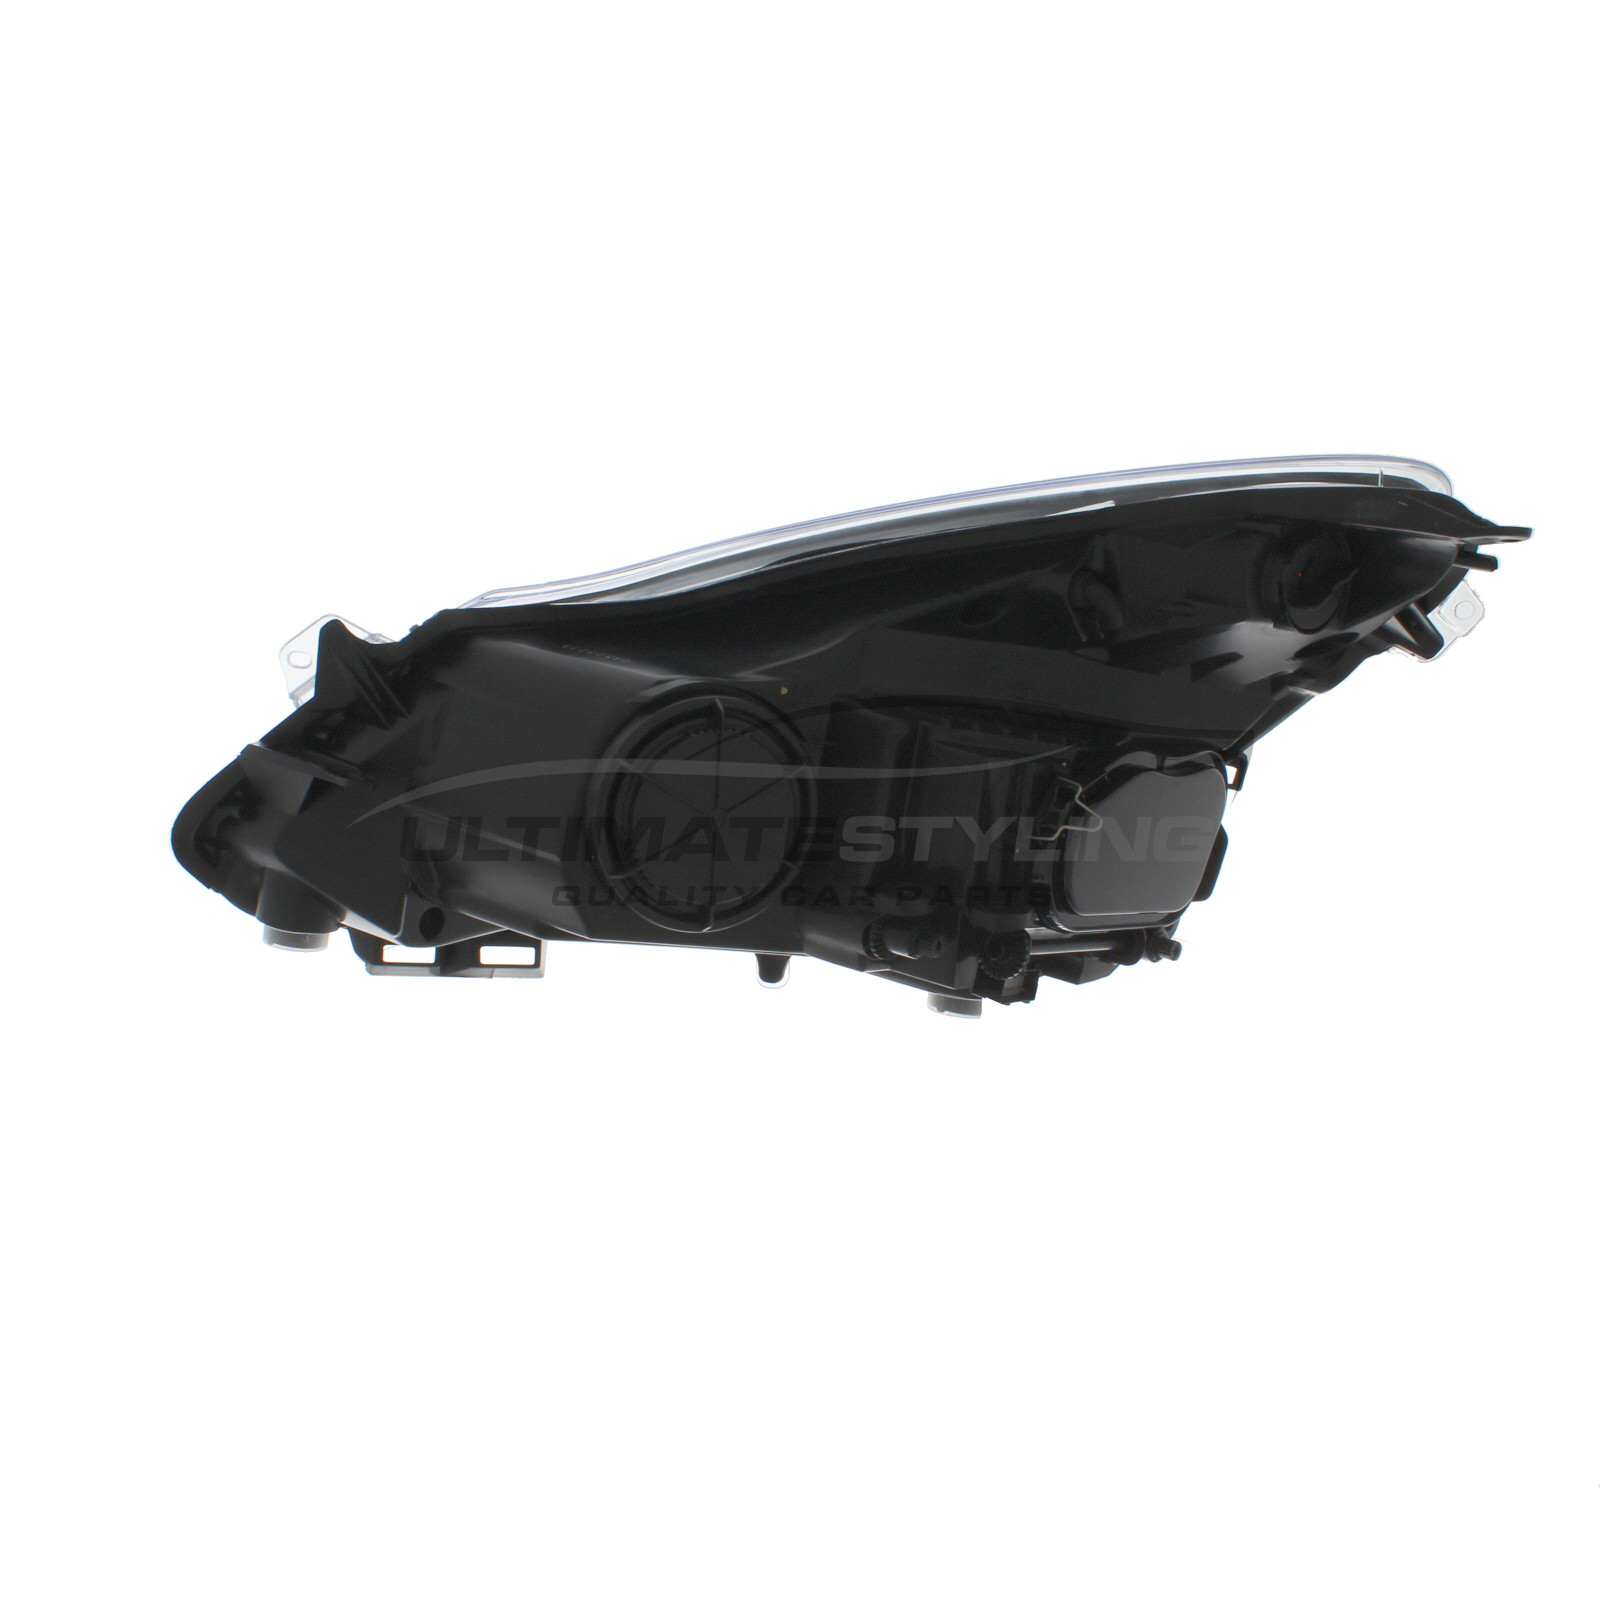 Vauxhall Corsa Headlight / Headlamp - Drivers Side (RH) - Halogen